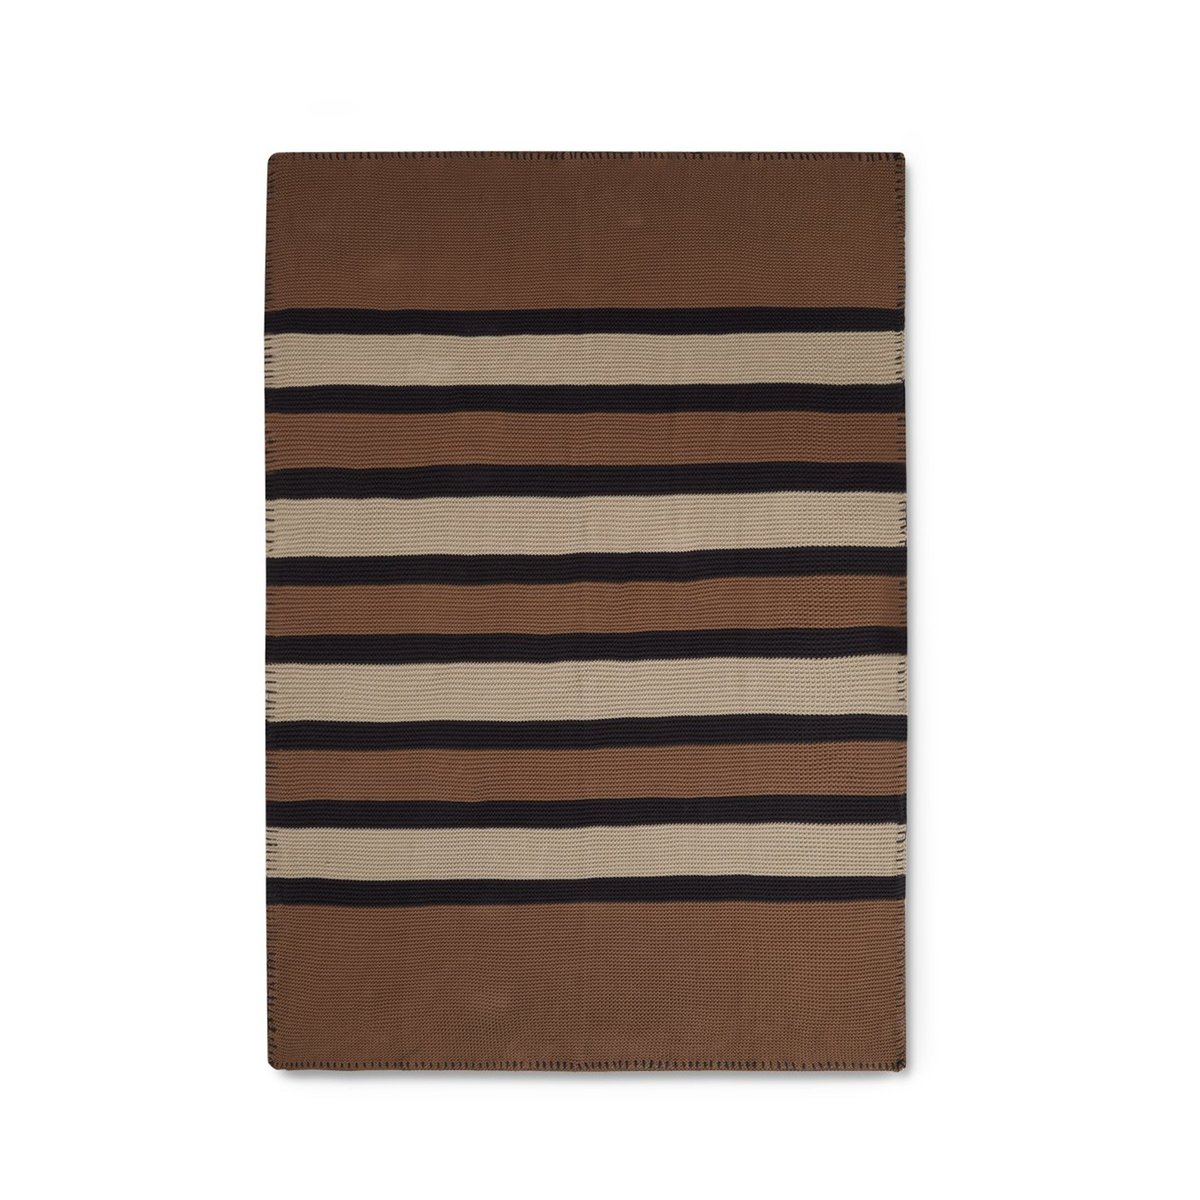 Lexington Striped Knitted Cotton plaid 130x170 cm Brown-beige-dark gray